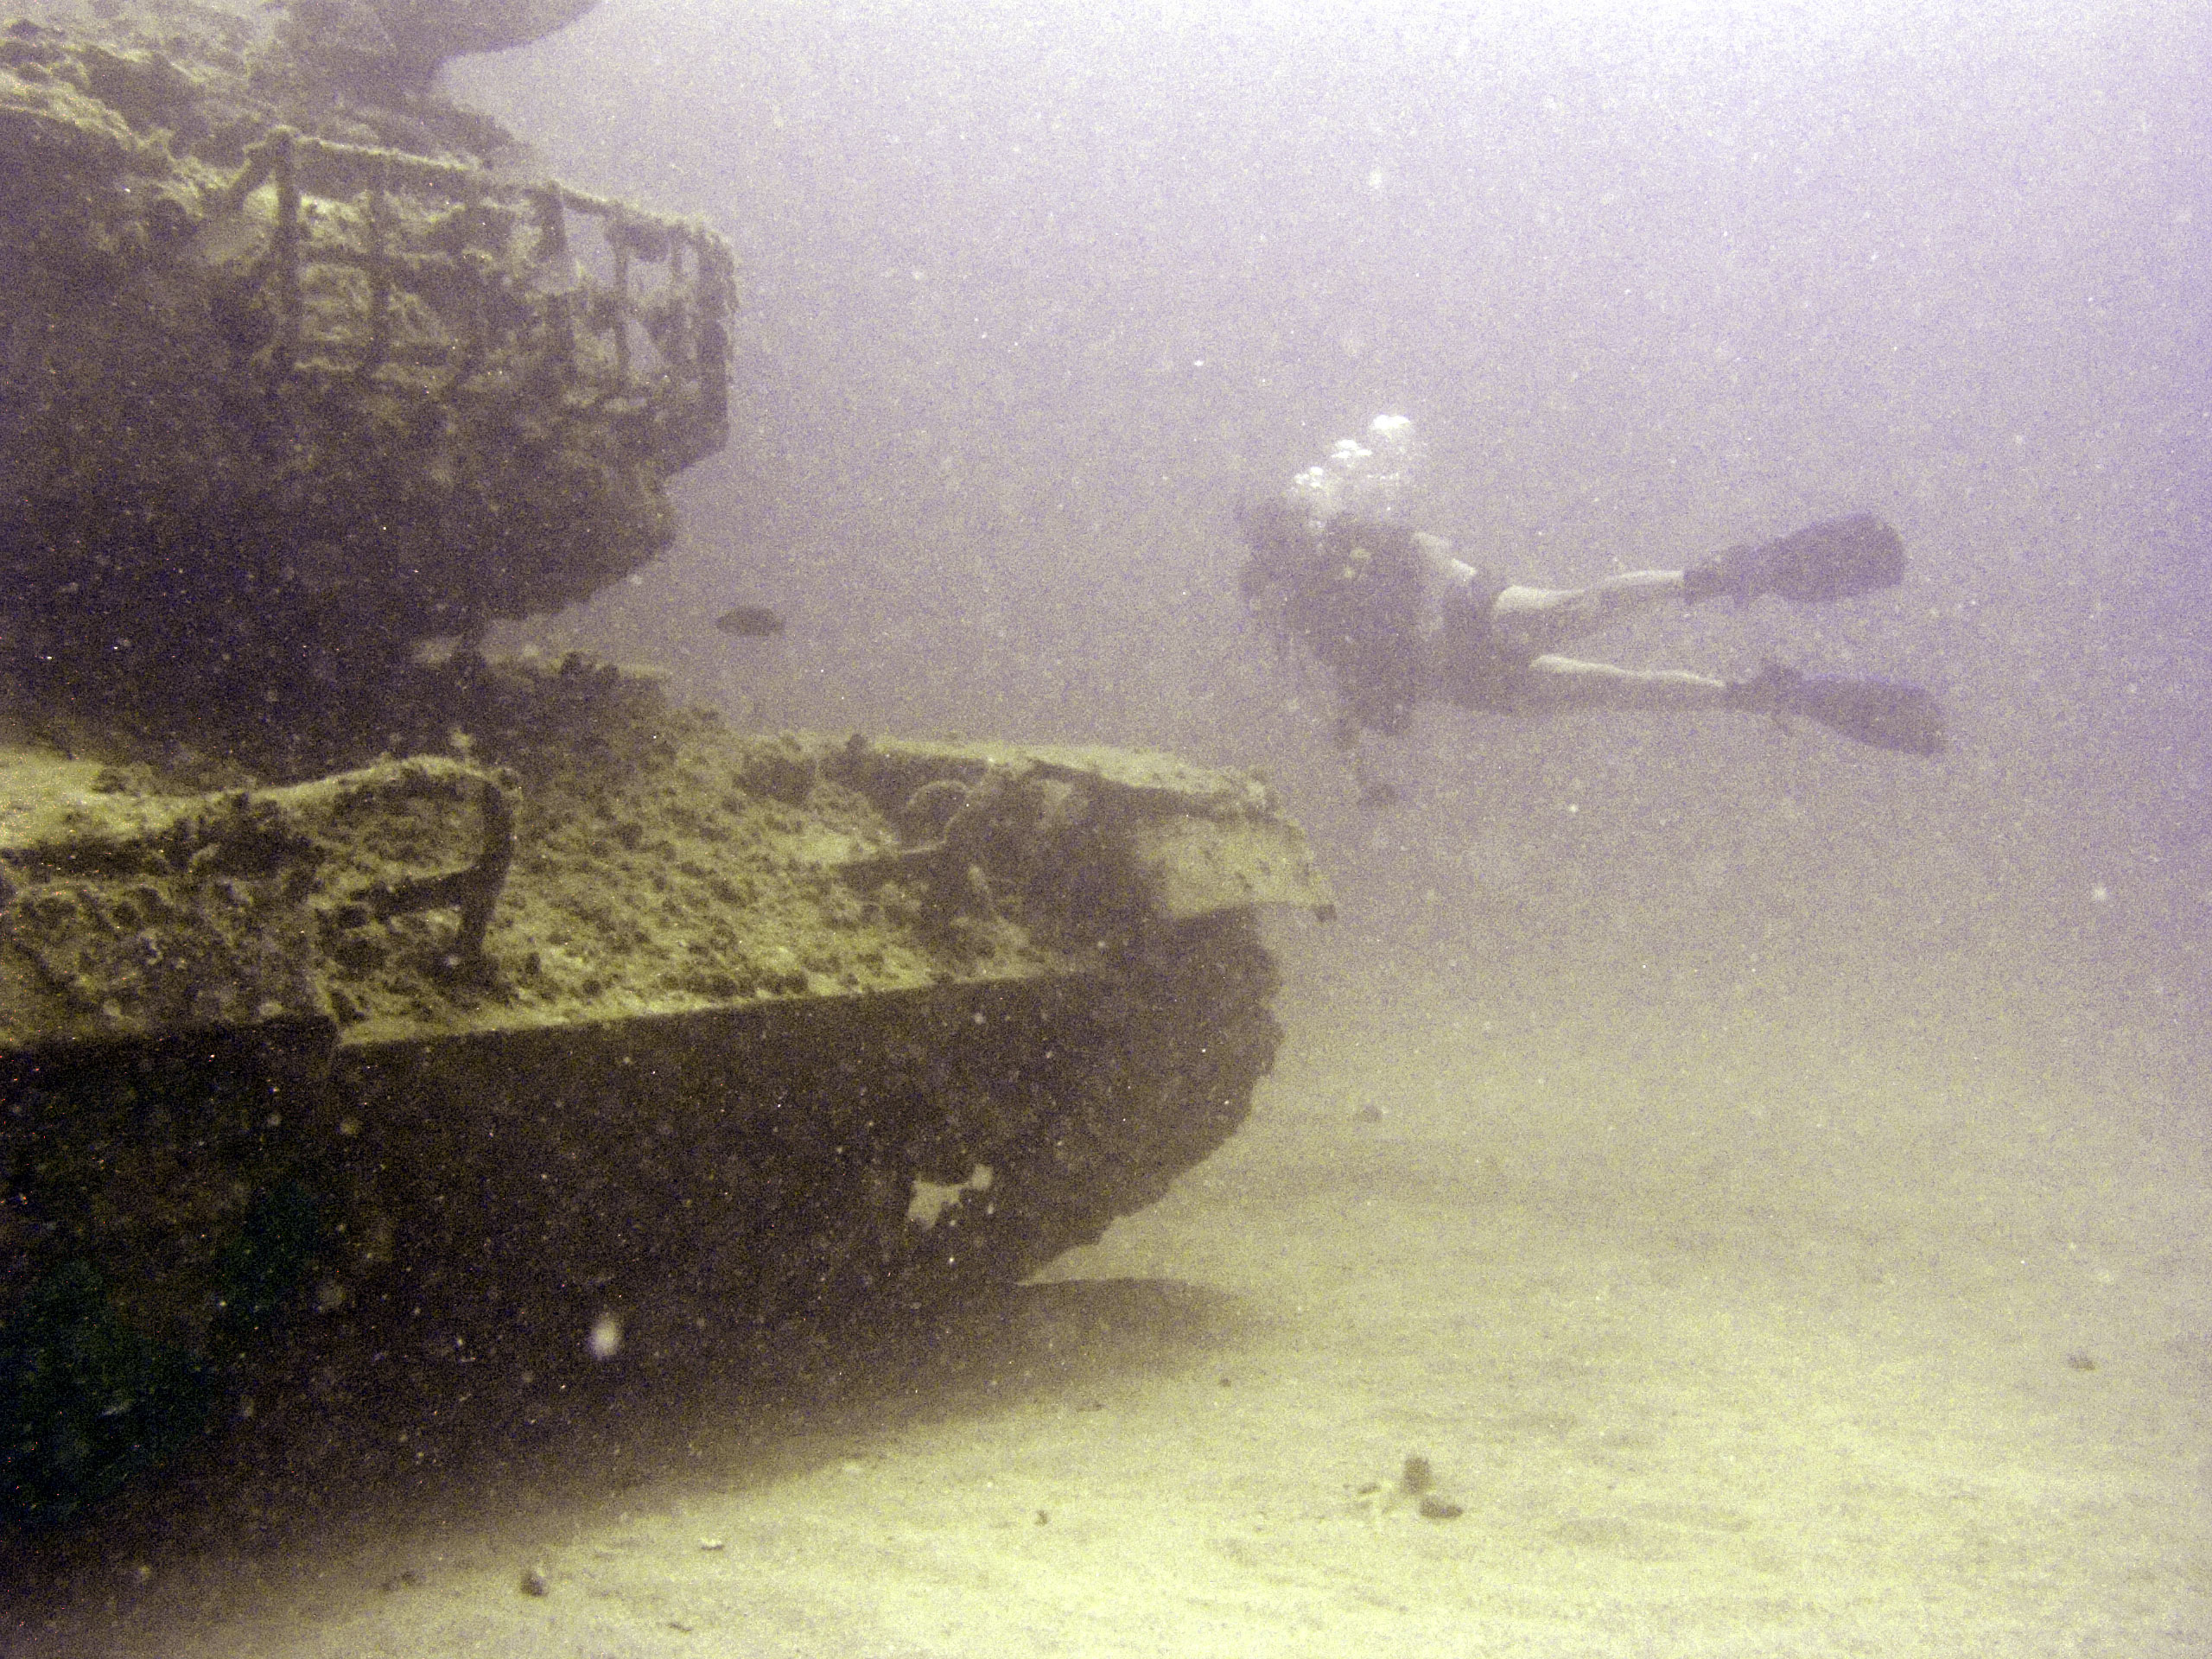 M60 Tanks, Pinellas County, Florida March 2006